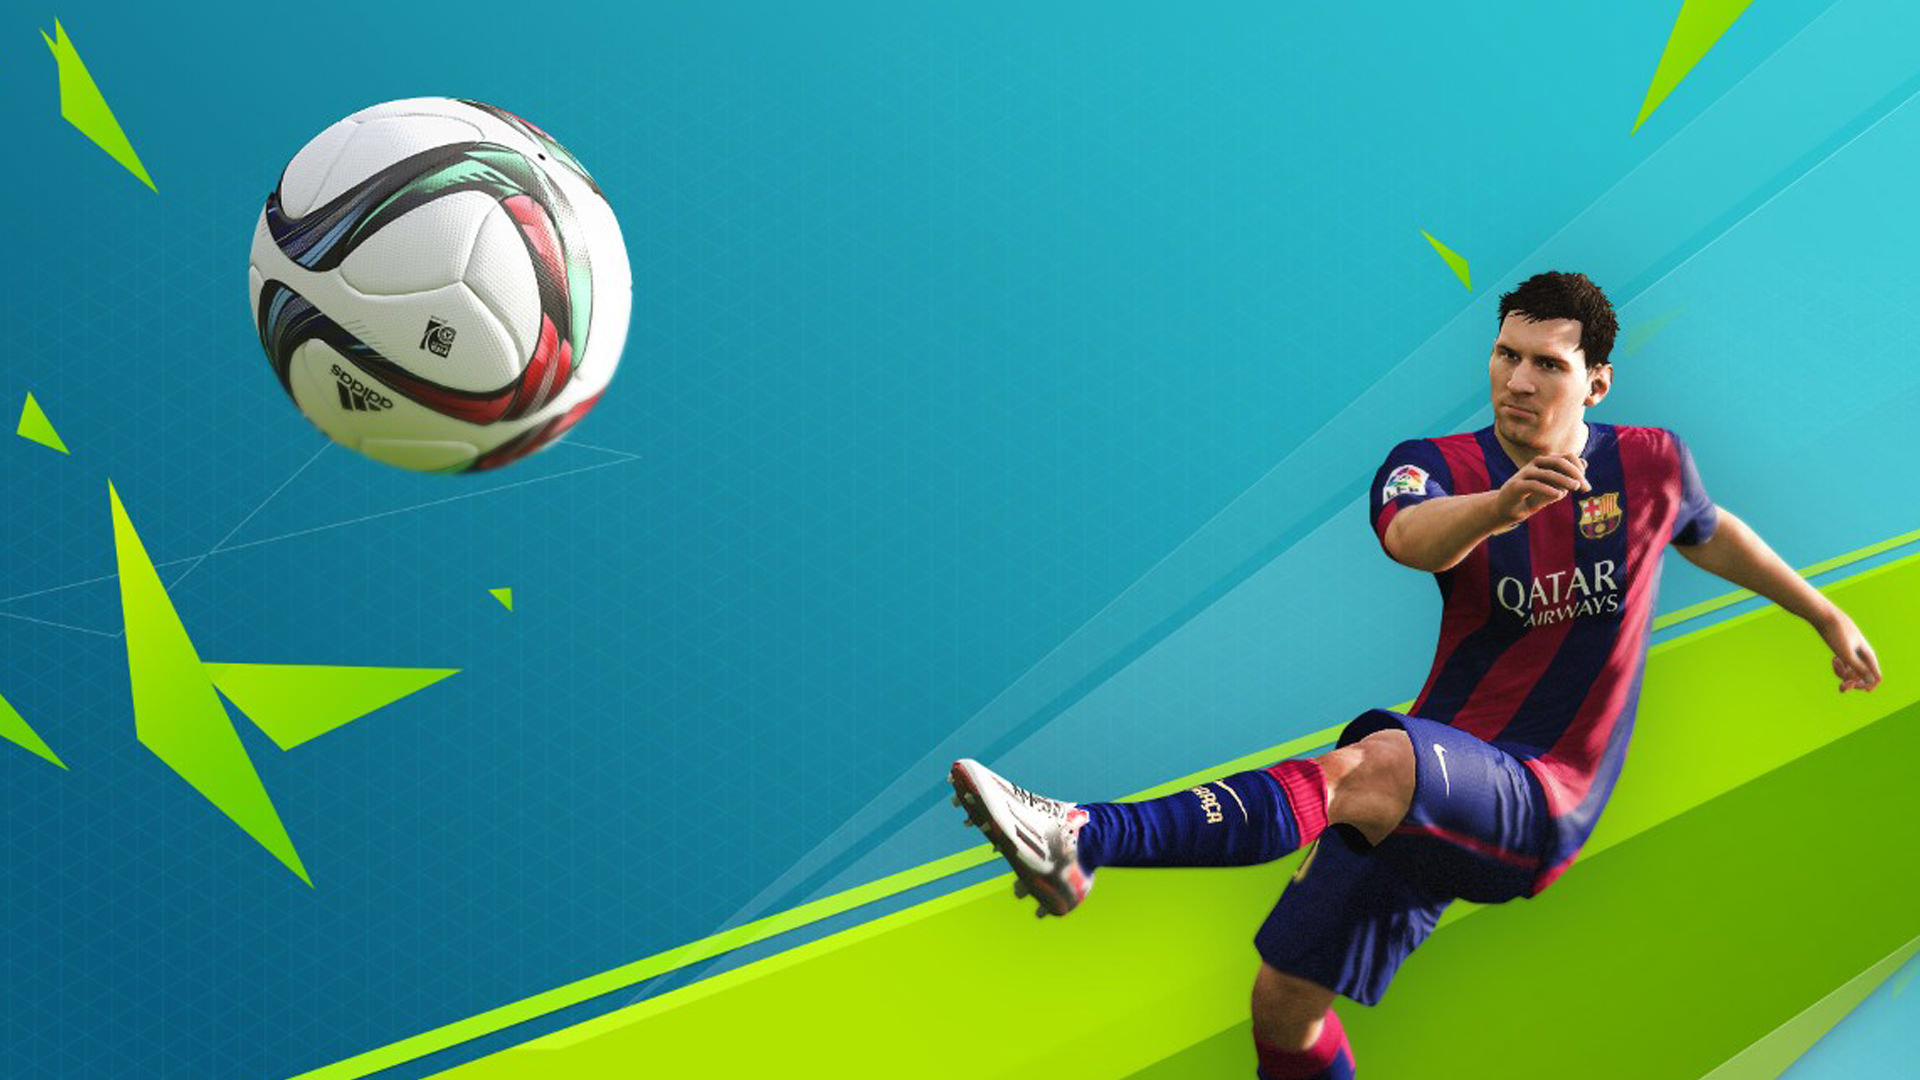 Fifa Backgrounds Free Download | PixelsTalk.Net